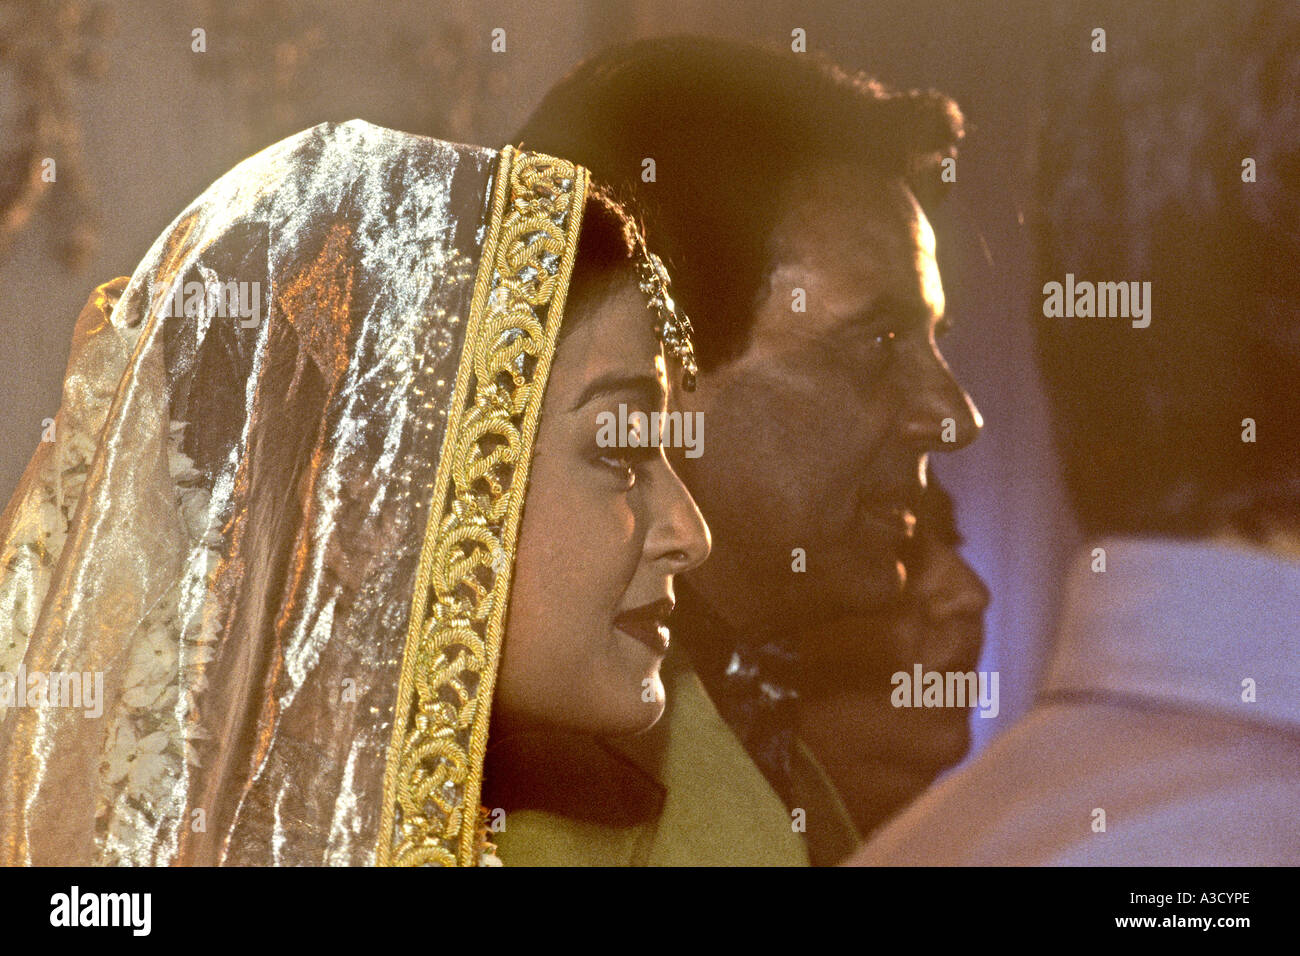 South Asian Indian Bollywood Film Actress Aishwarya Rai on sets of Hindi film Aur Pyar Ho Gaya with actor Dharmendra India Stock Photo